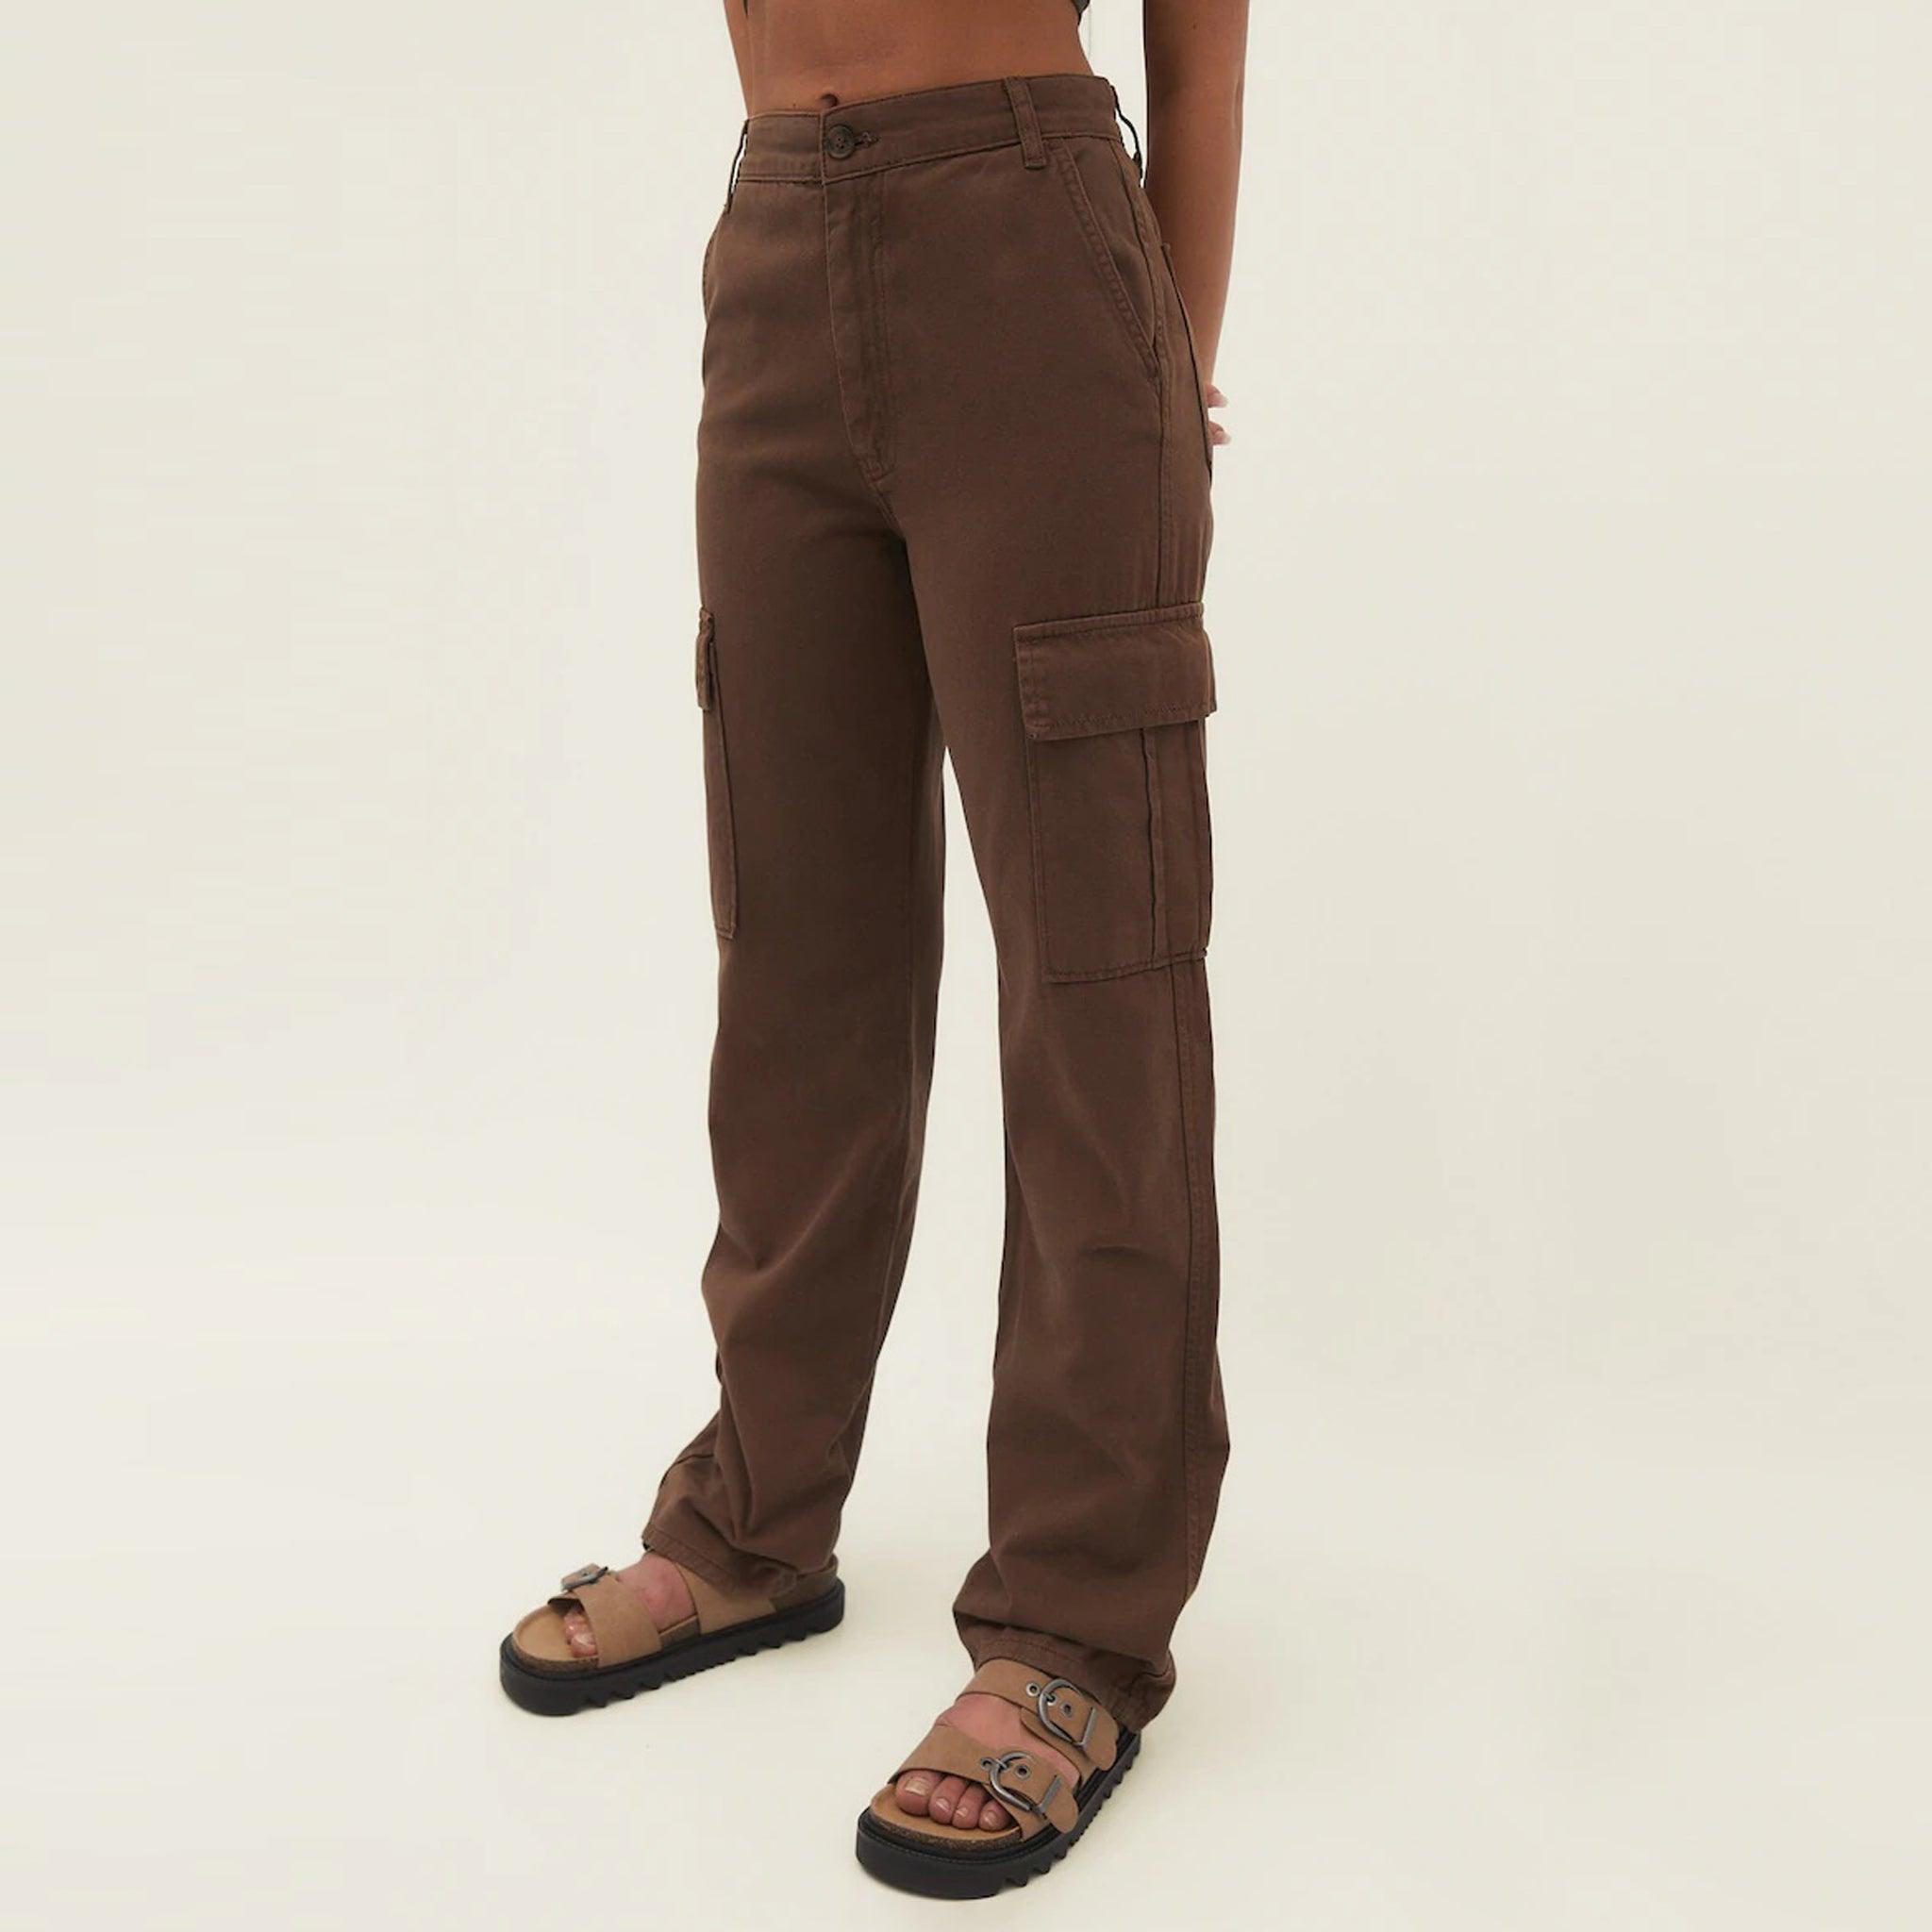 Female Cargo Pants,